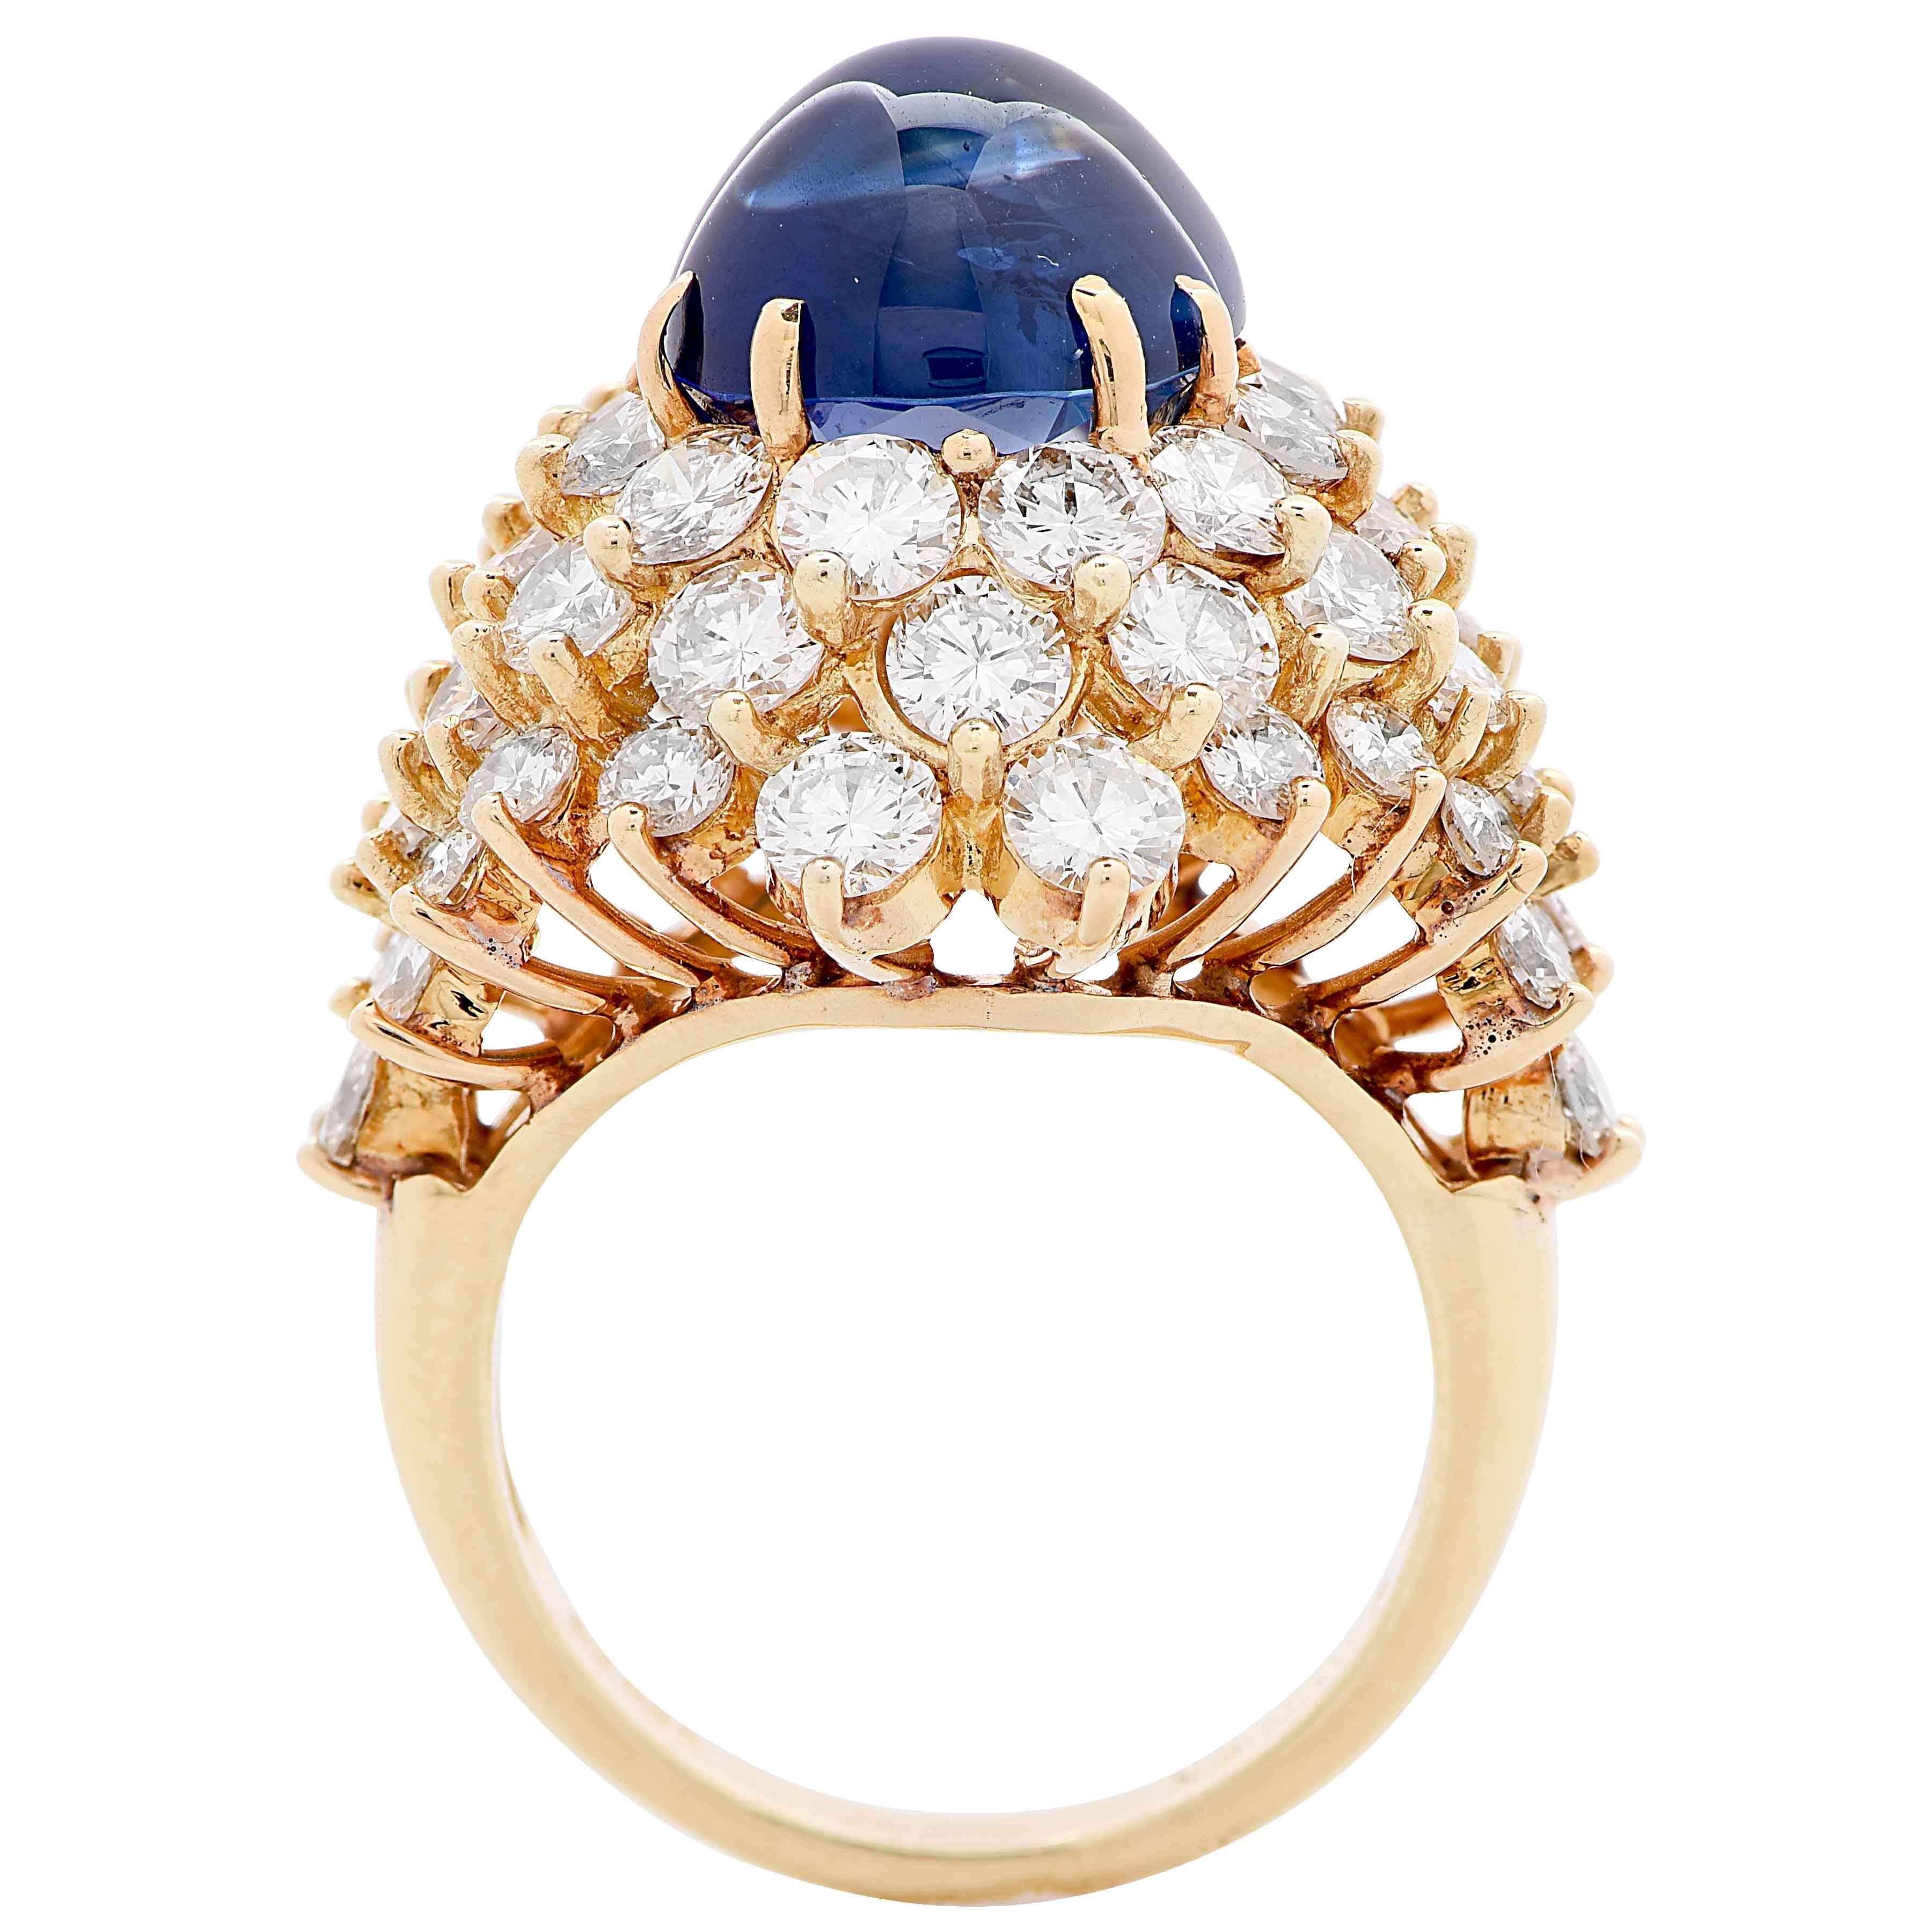 Women's Kurt Wayne Approximately 9.8 Carat Natural Cabochon Sapphire Diamond Gold Ring For Sale